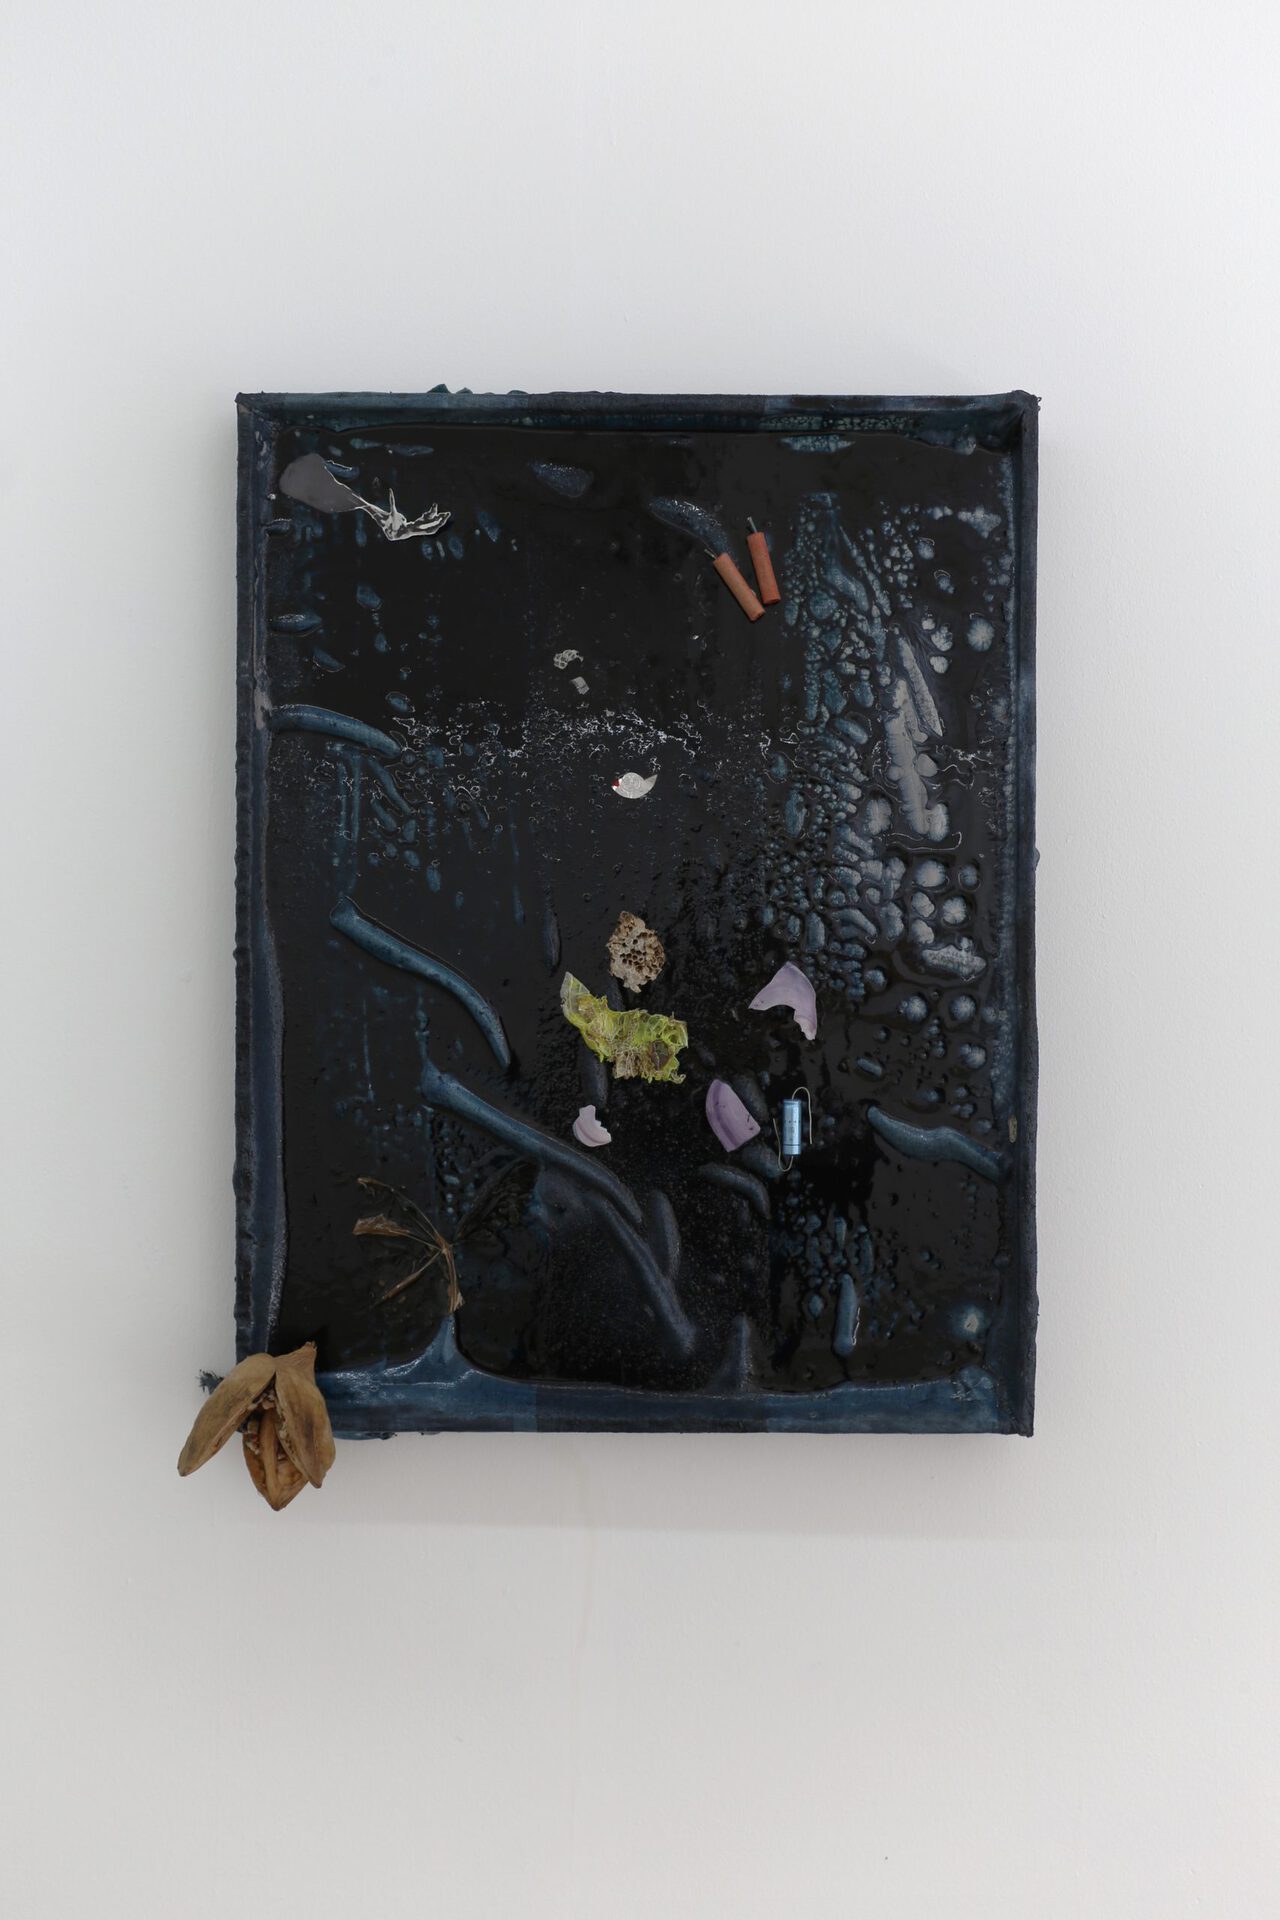 Anna Sophie de Vries, “Memento Mori”, bat wing, bee hive, flower, shells, battery, fire crackers, 2019